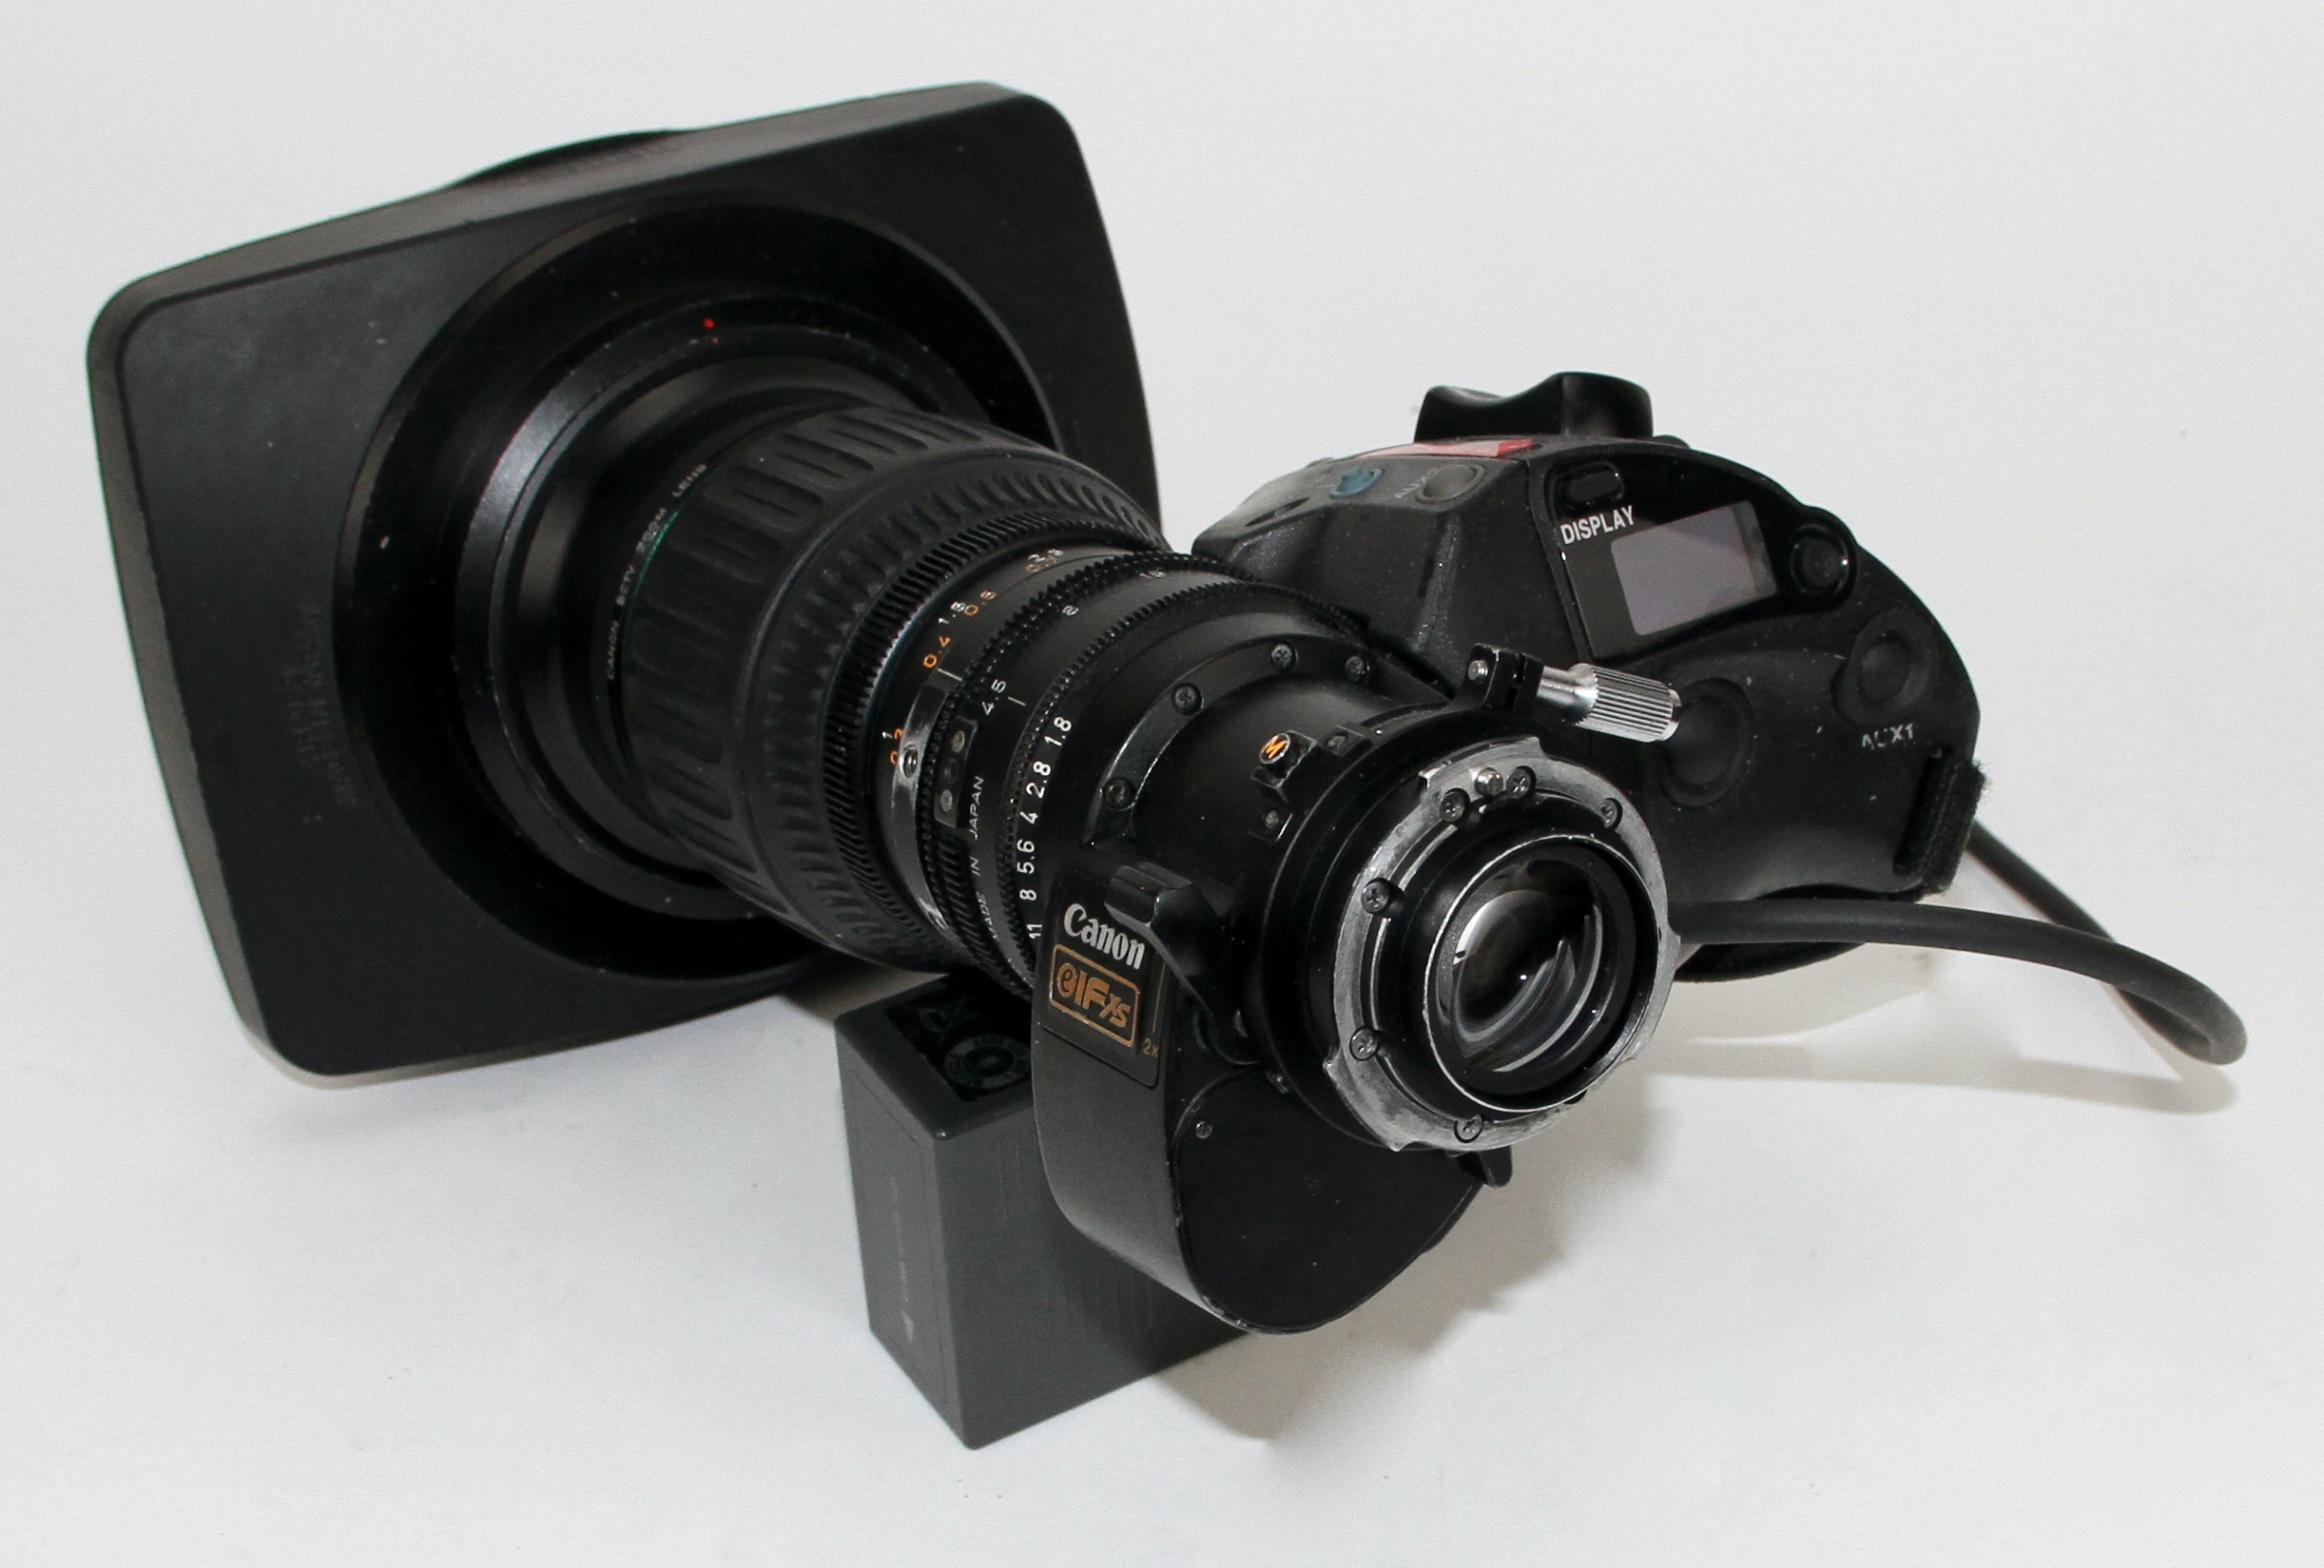 Canon J11eX4.5B4-4 – 1